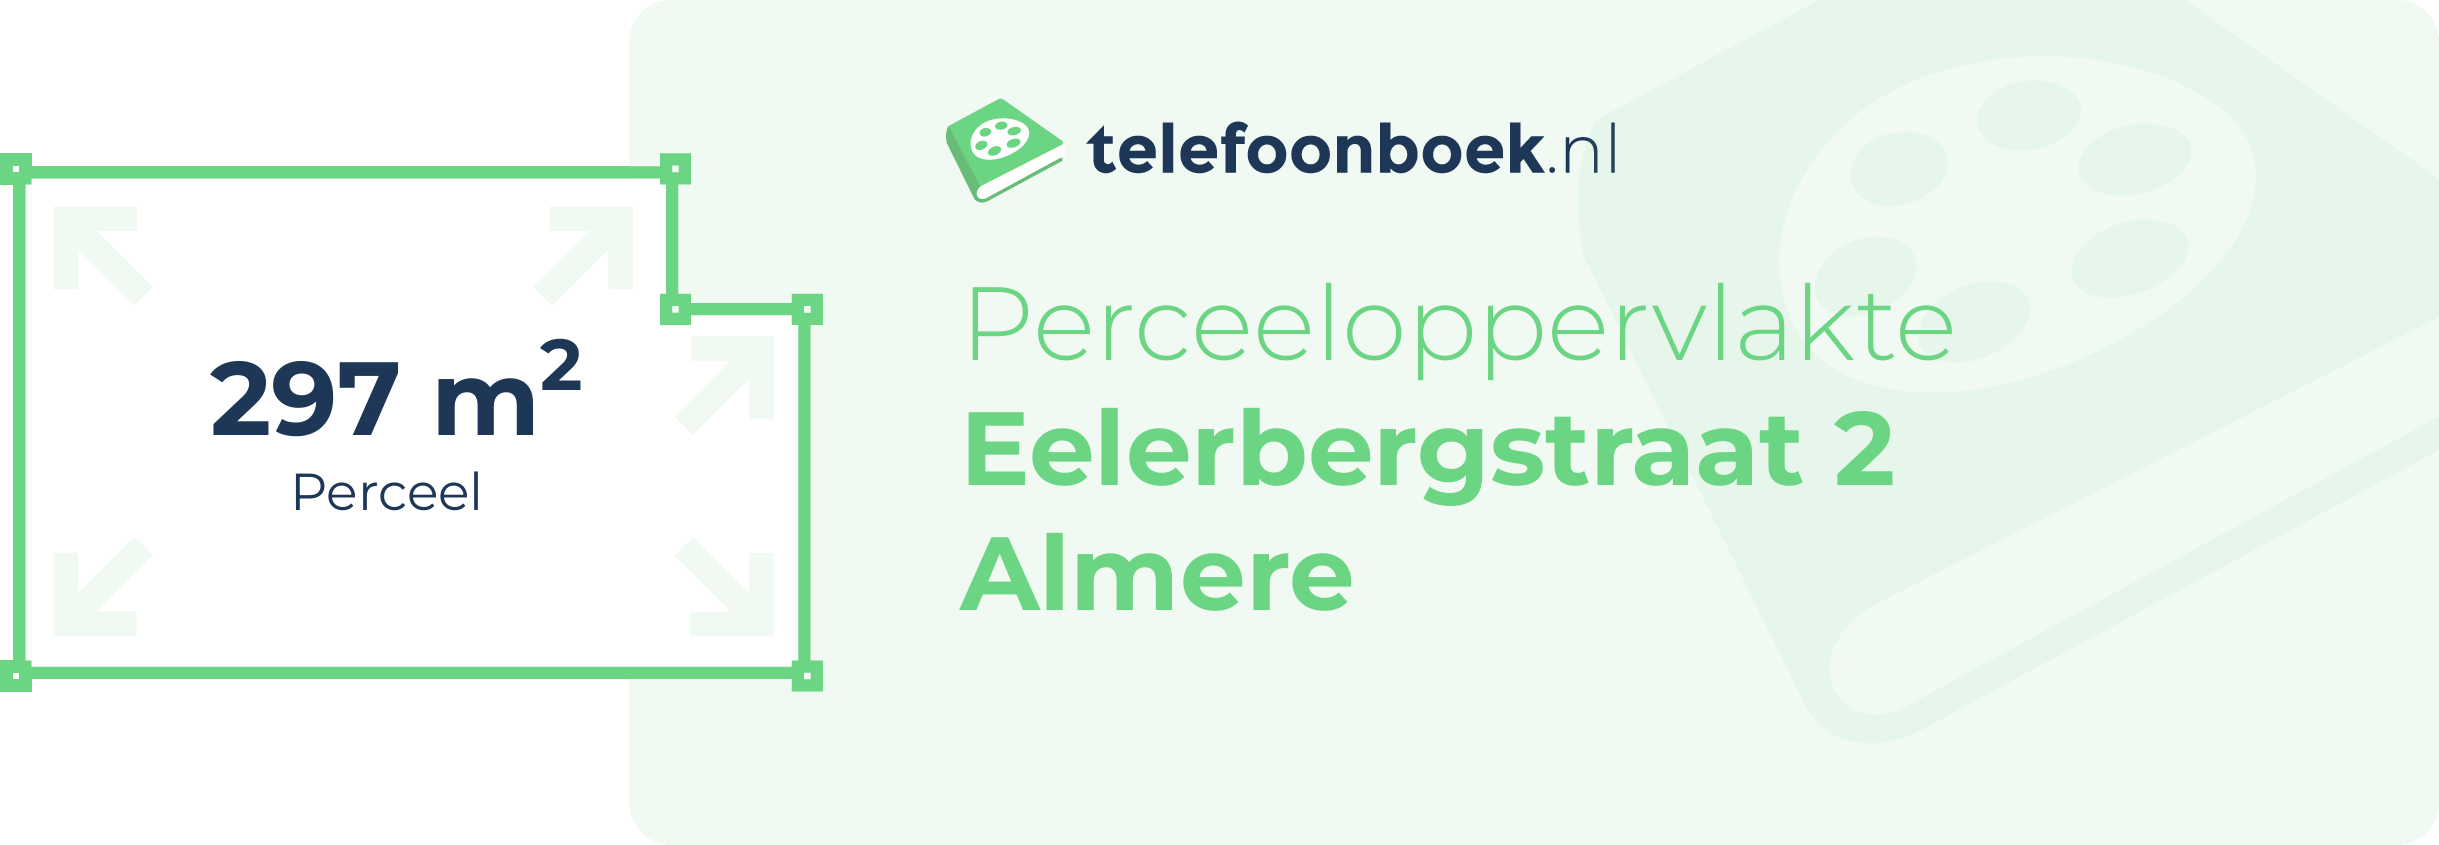 Perceeloppervlakte Eelerbergstraat 2 Almere